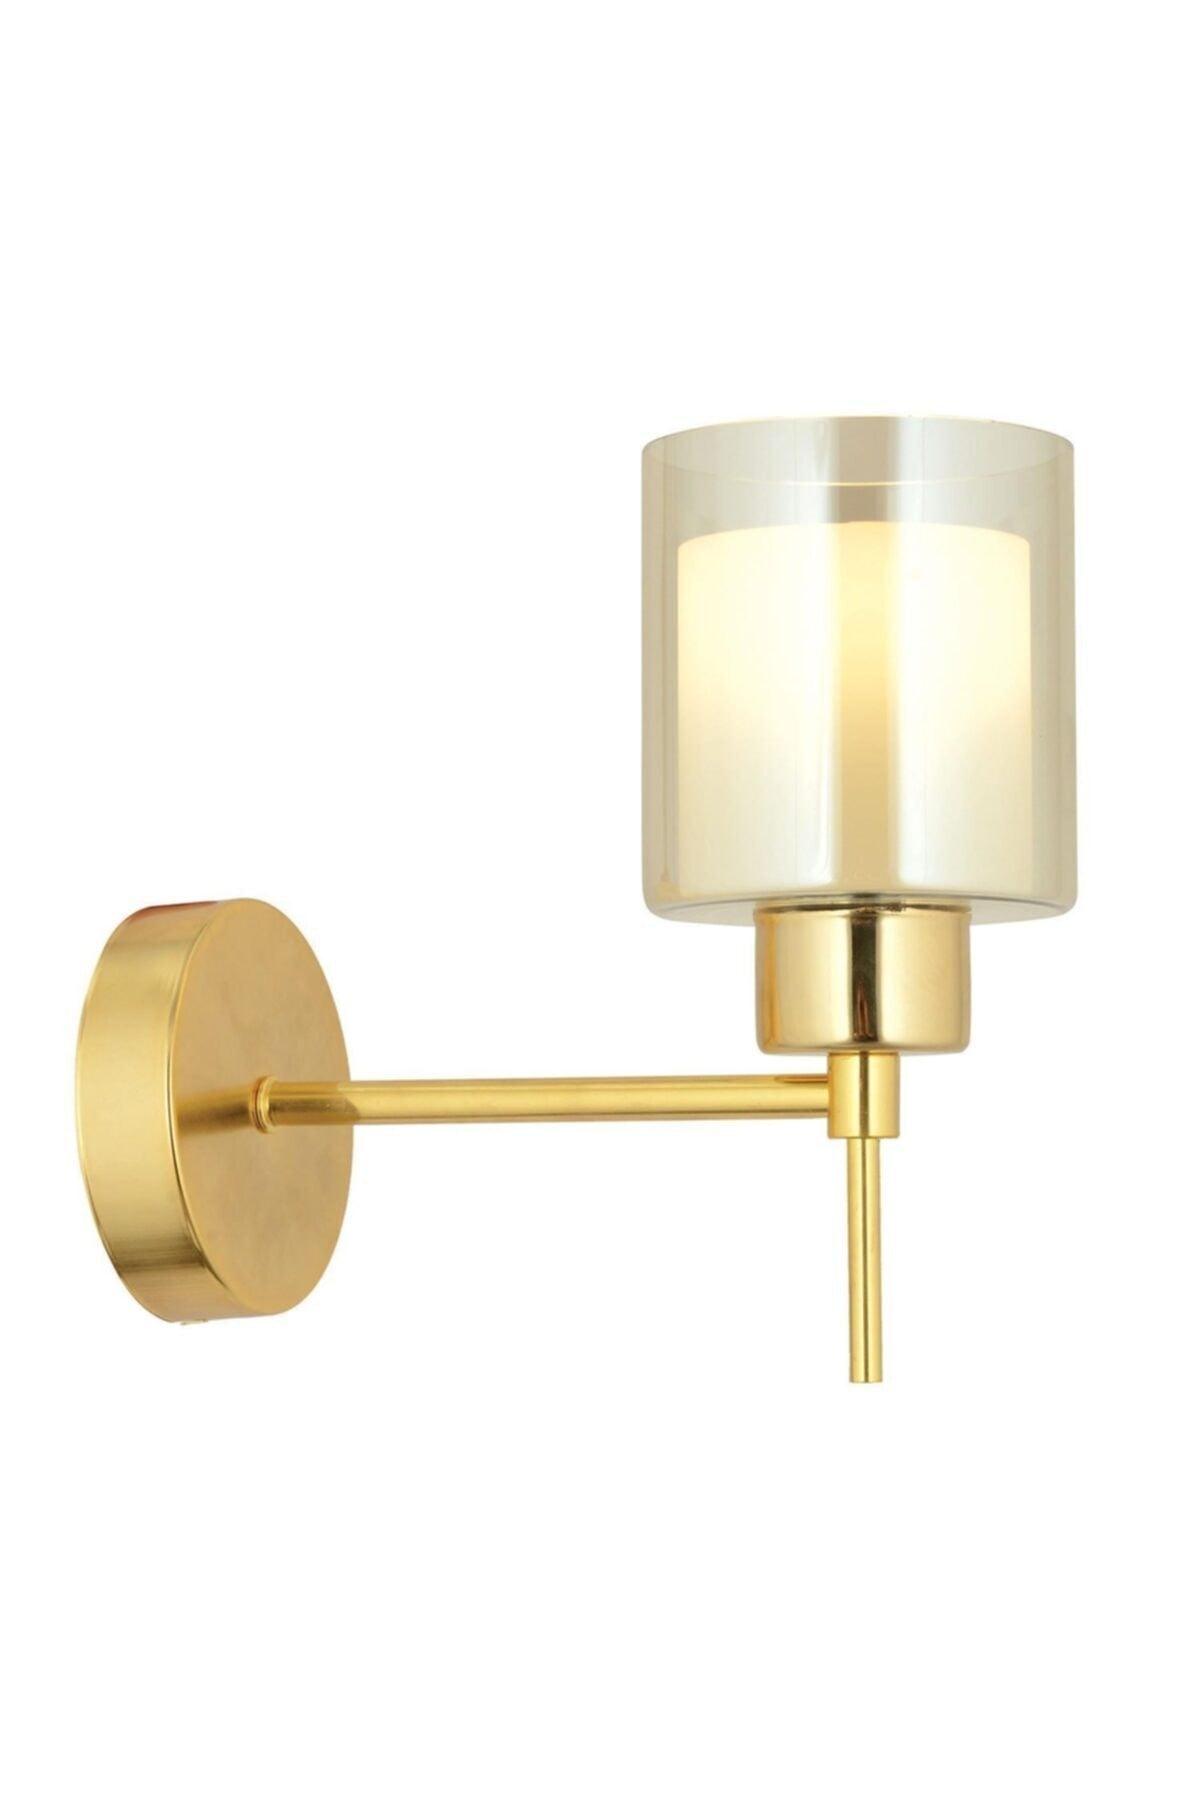 Cemre Gold Wall Lamp Modern Bedroom-Bed Head Design Wall Sconce - Swordslife